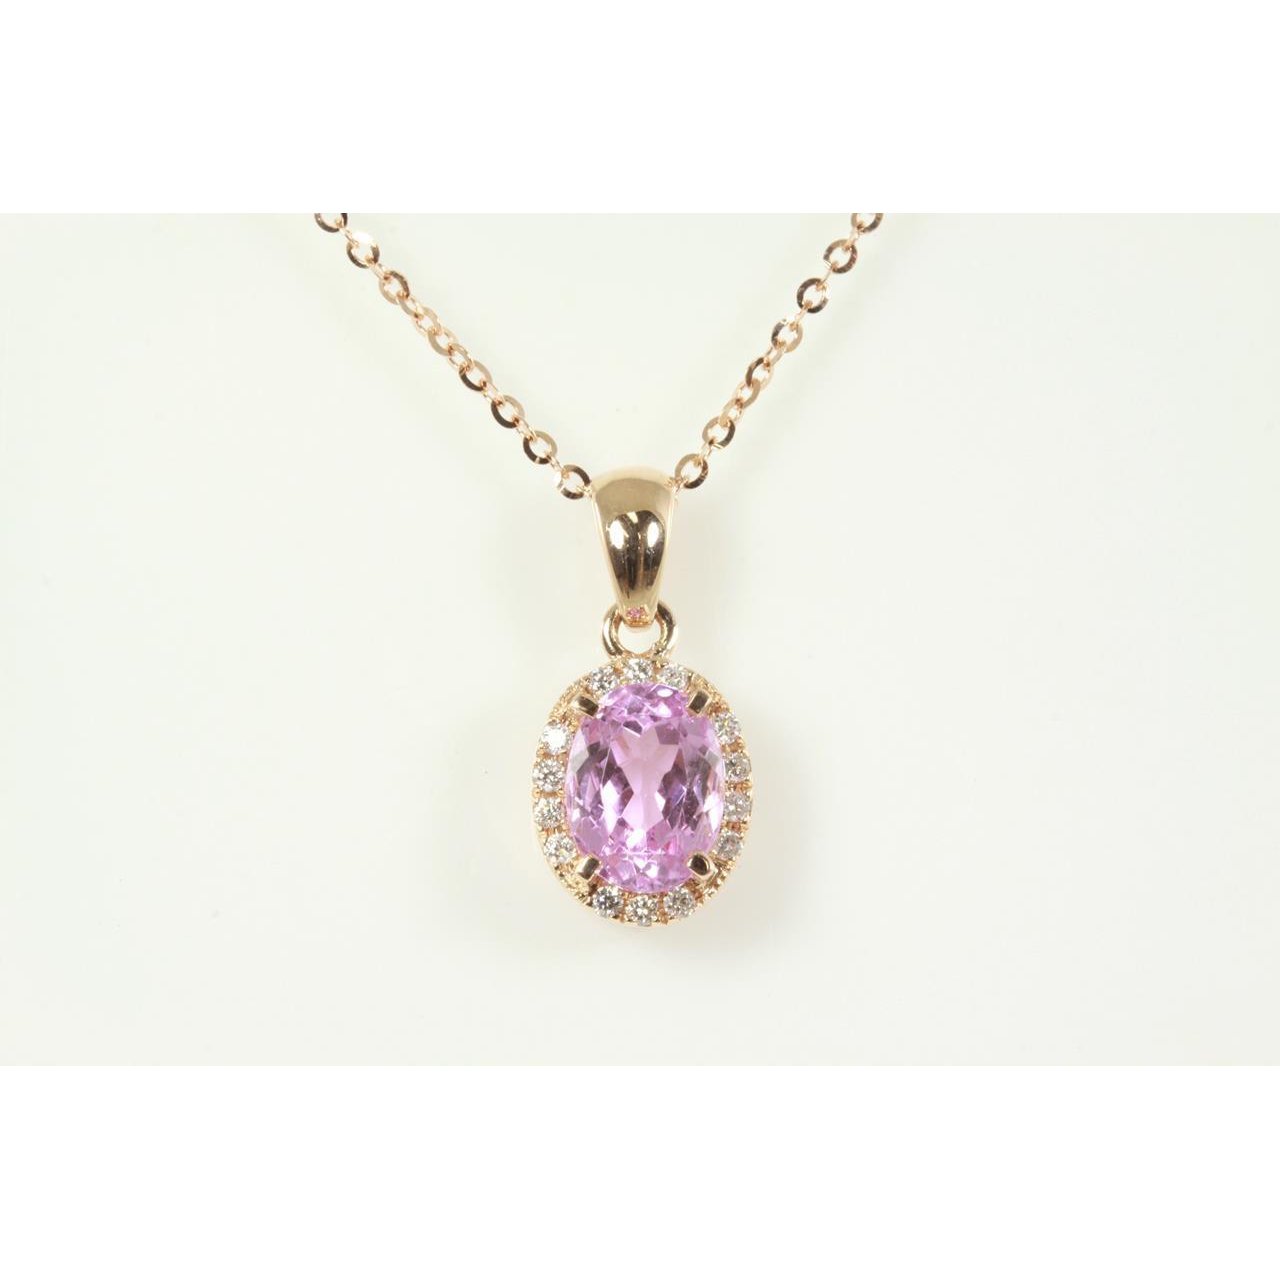 10 Carats Pink Oval Kunzite With Diamond Pendant Women Jewelry - Gemstone Pendant-harrychadent.ca